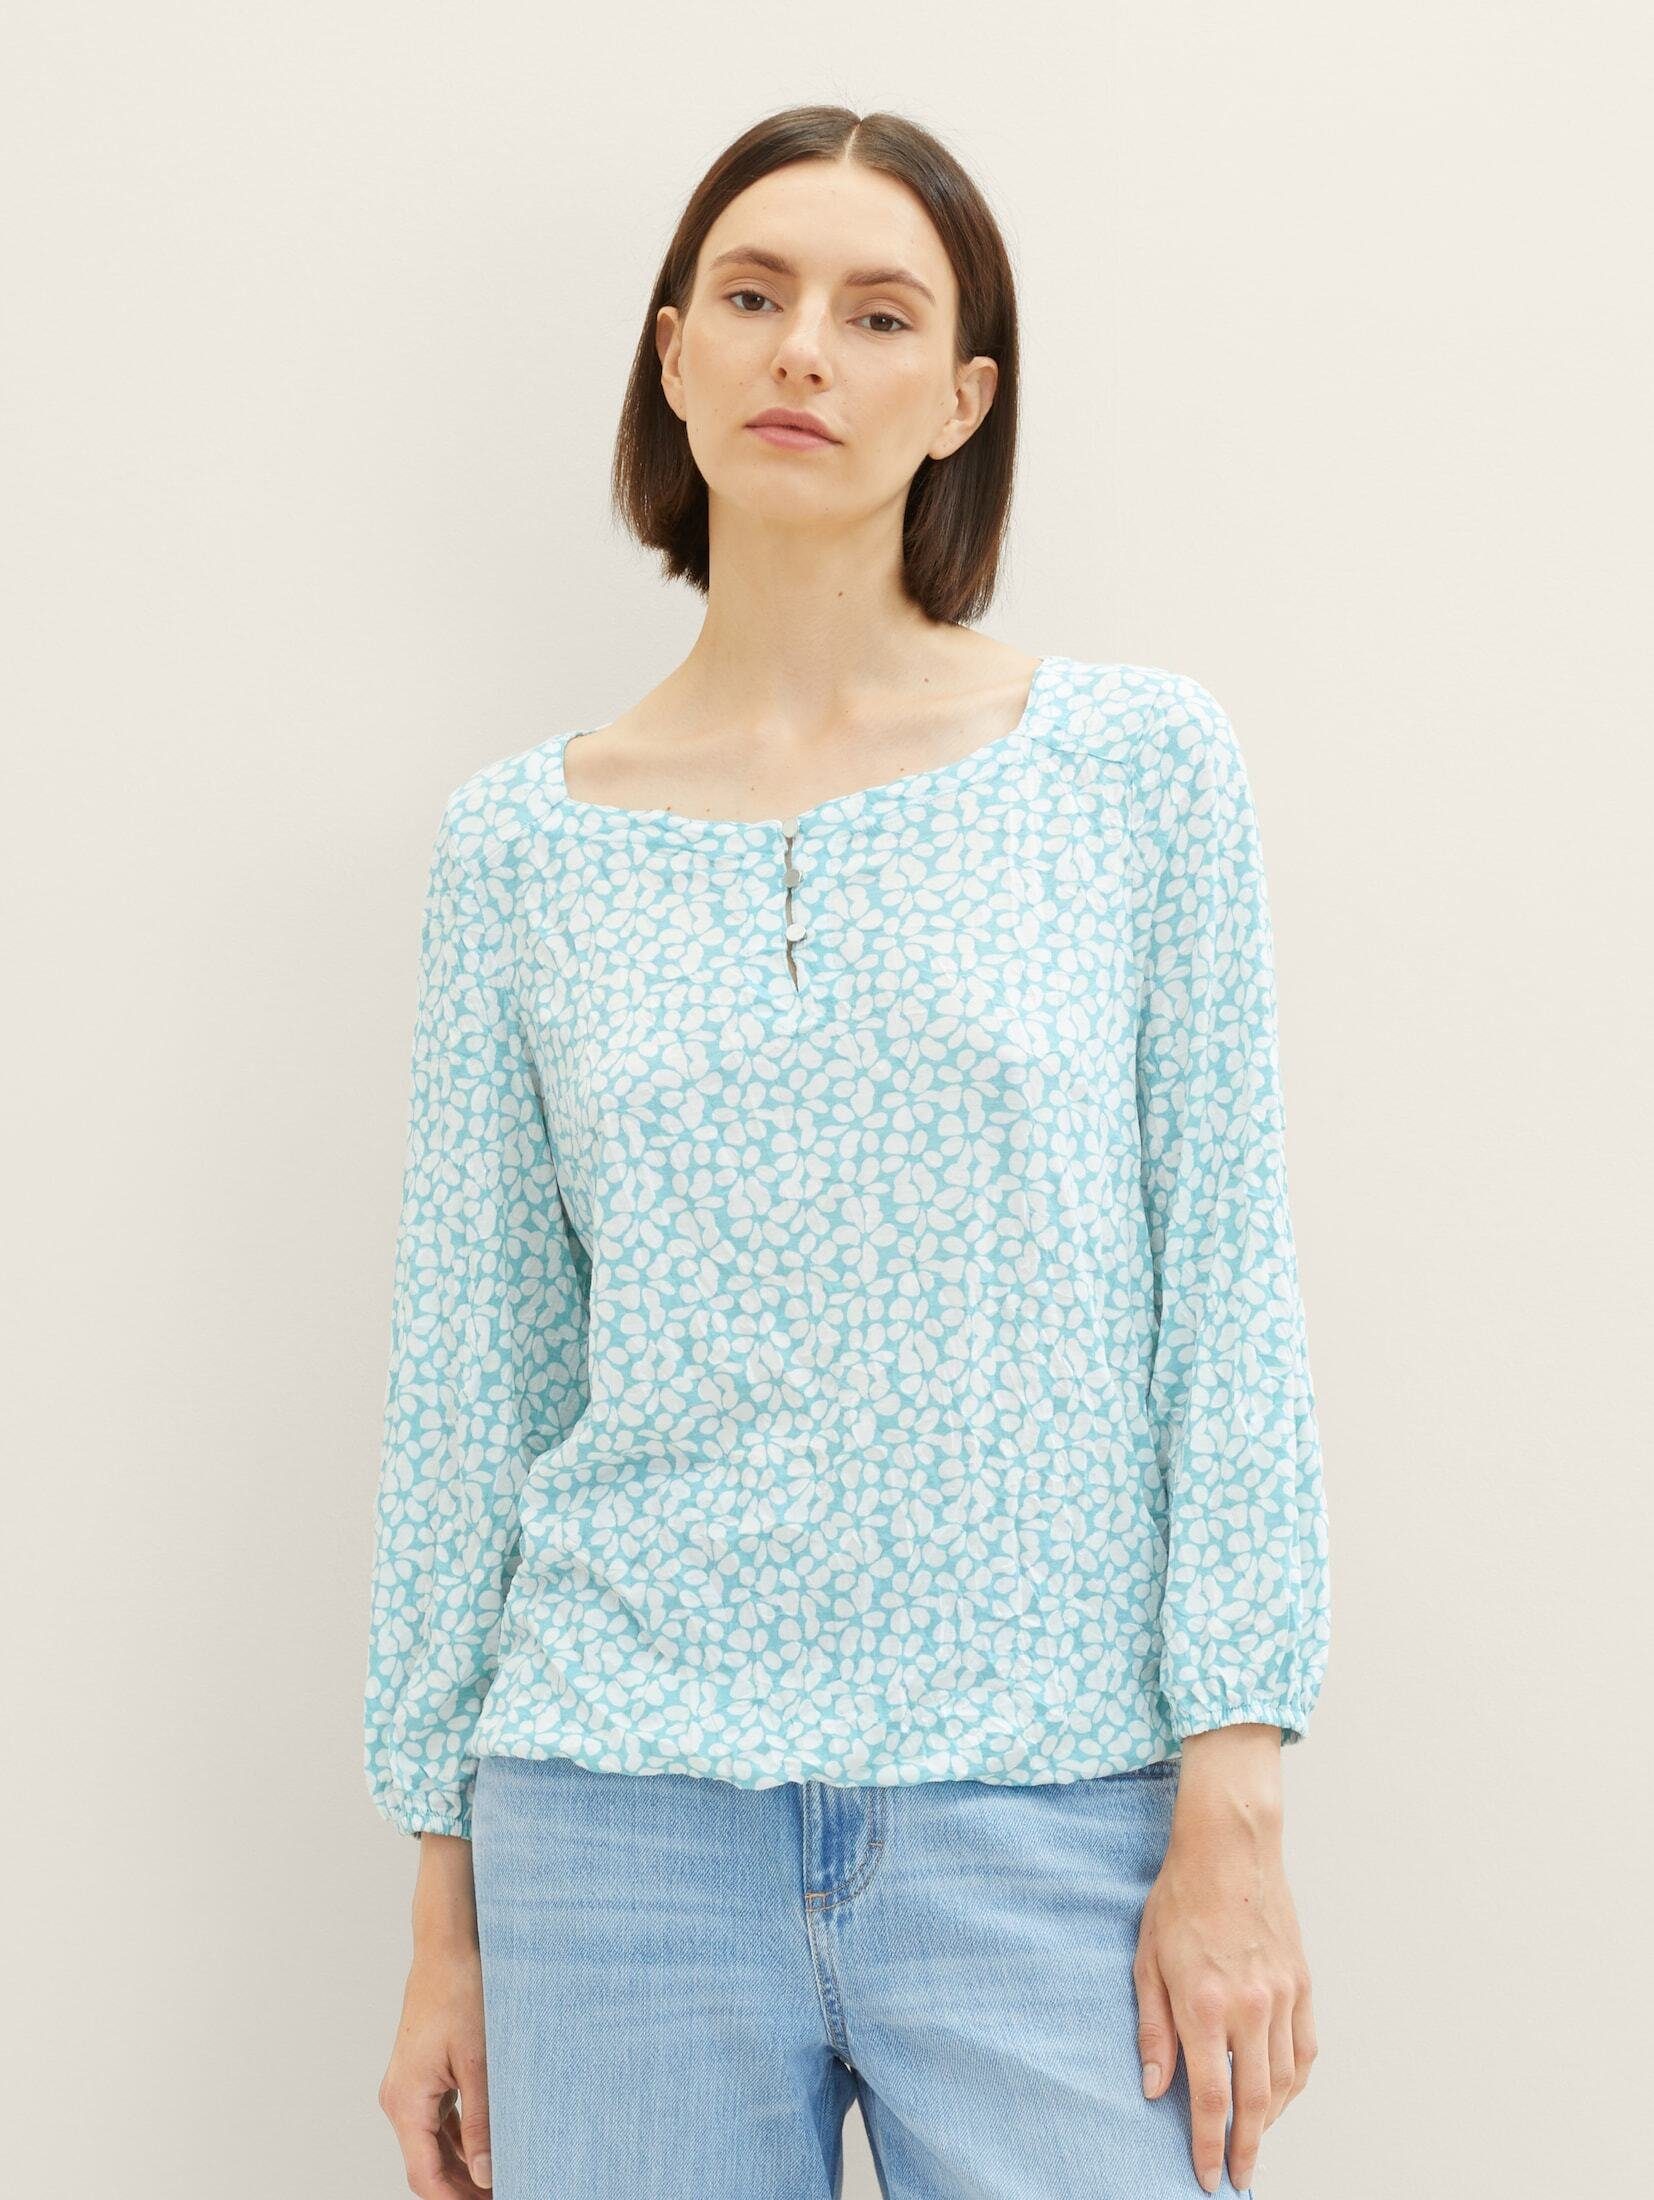 TOM TAILOR T-Shirt T-Shirt teal design floral Allover-Print mit